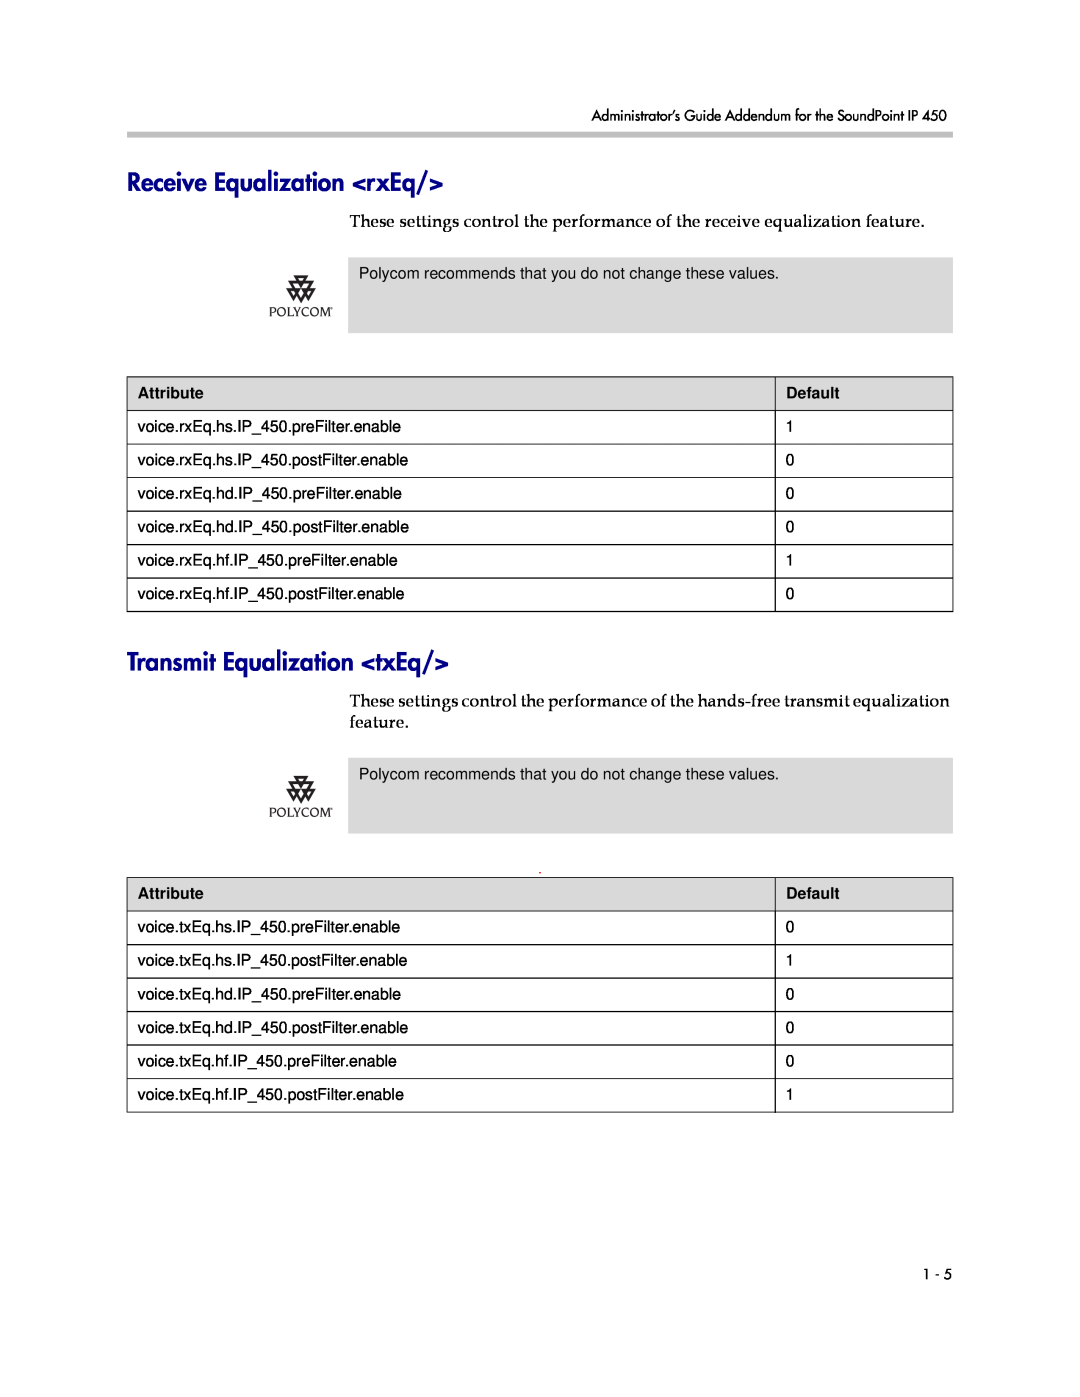 Polycom SIP 3.1 manual Receive Equalization rxEq, Transmit Equalization txEq, Attribute, Default 